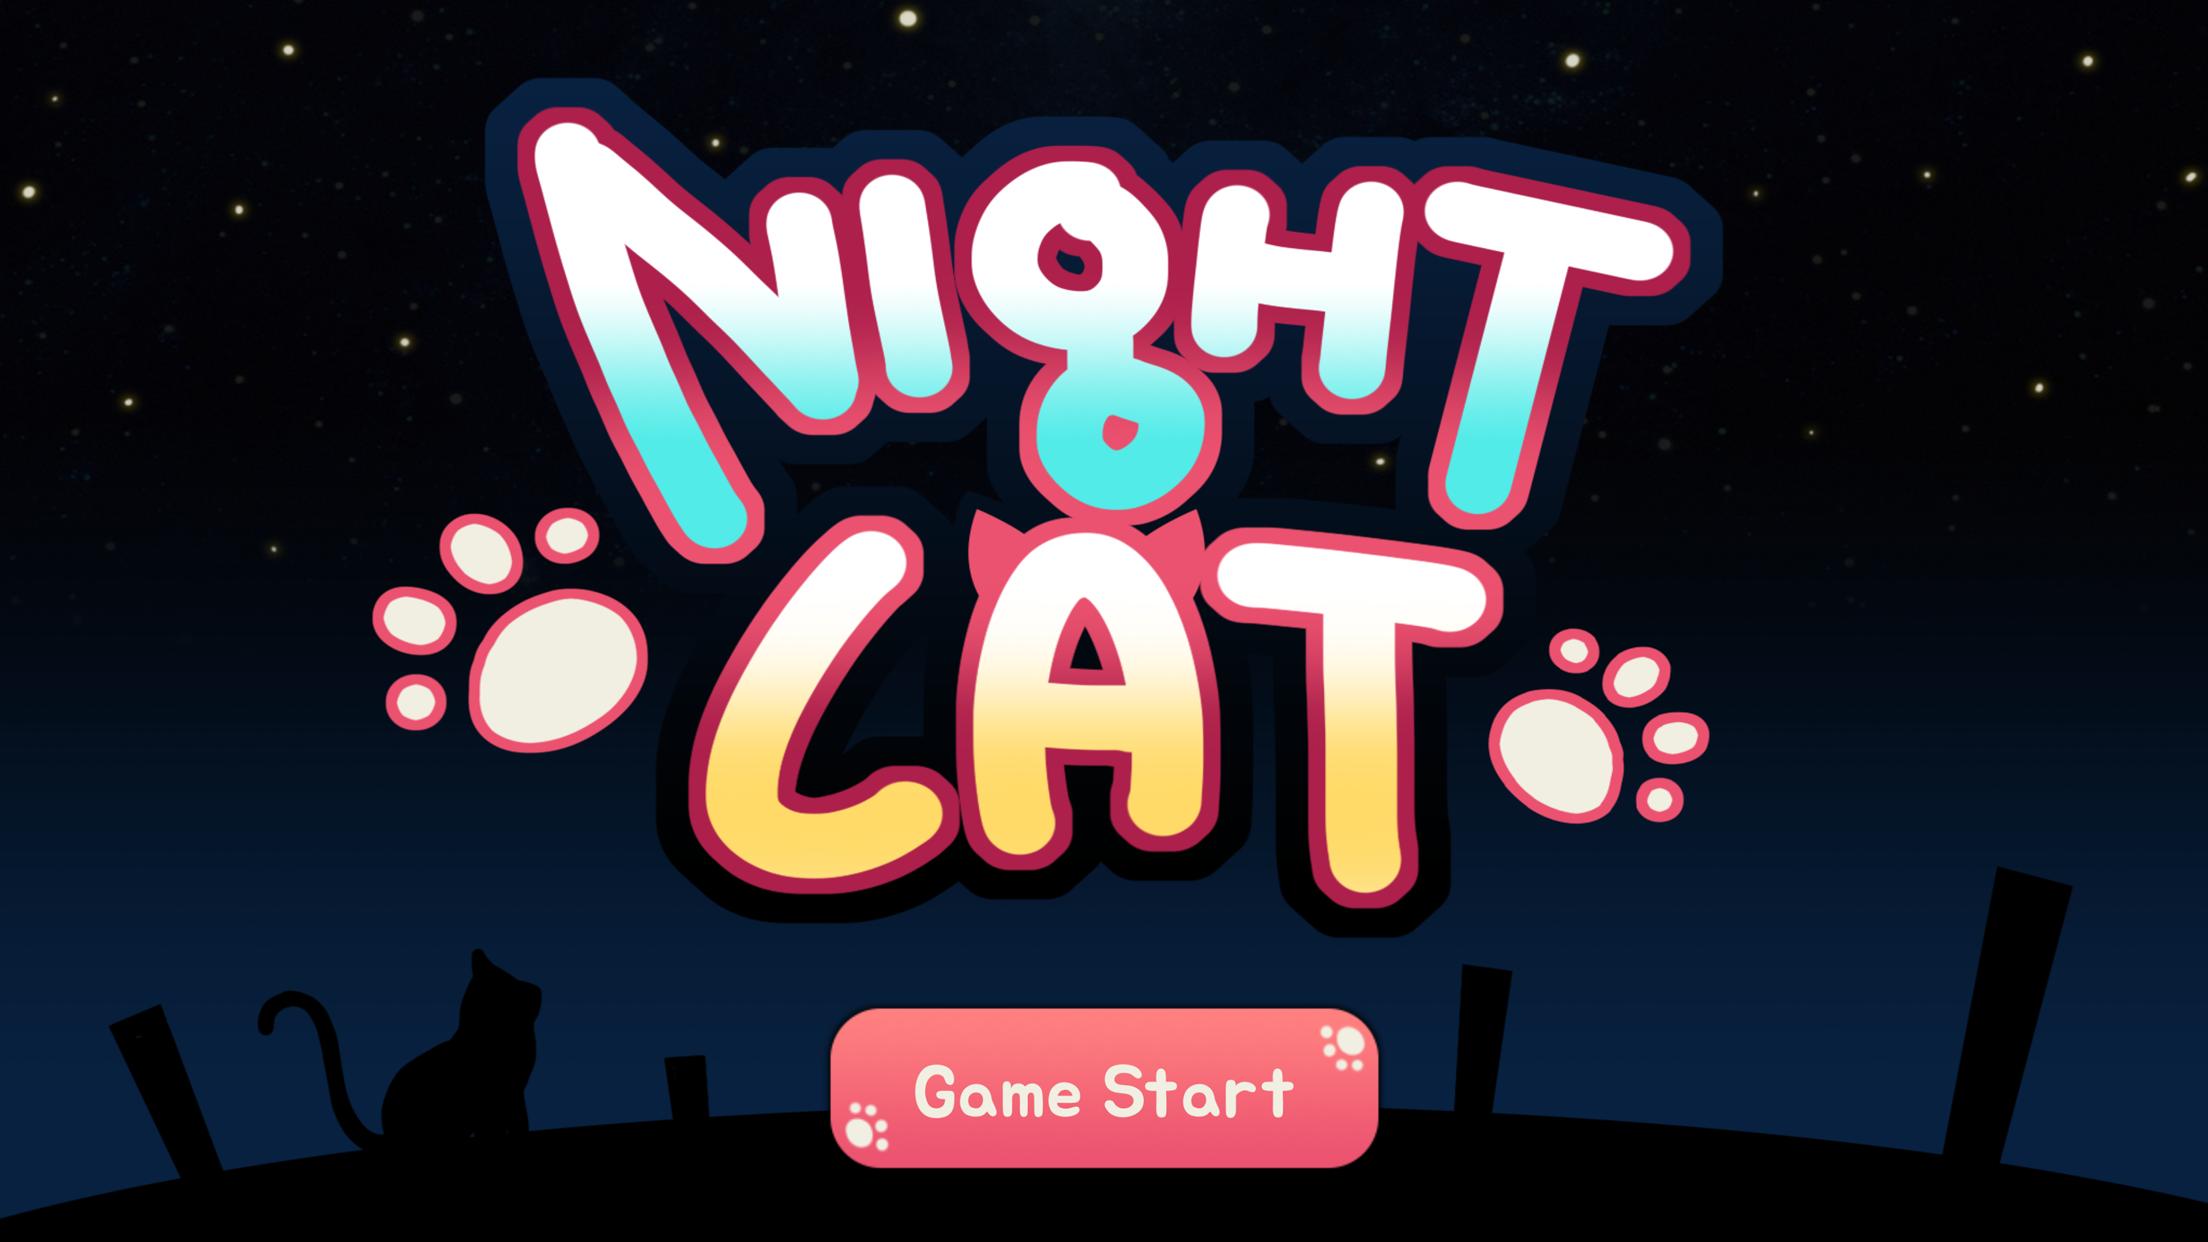 Nightcat 1